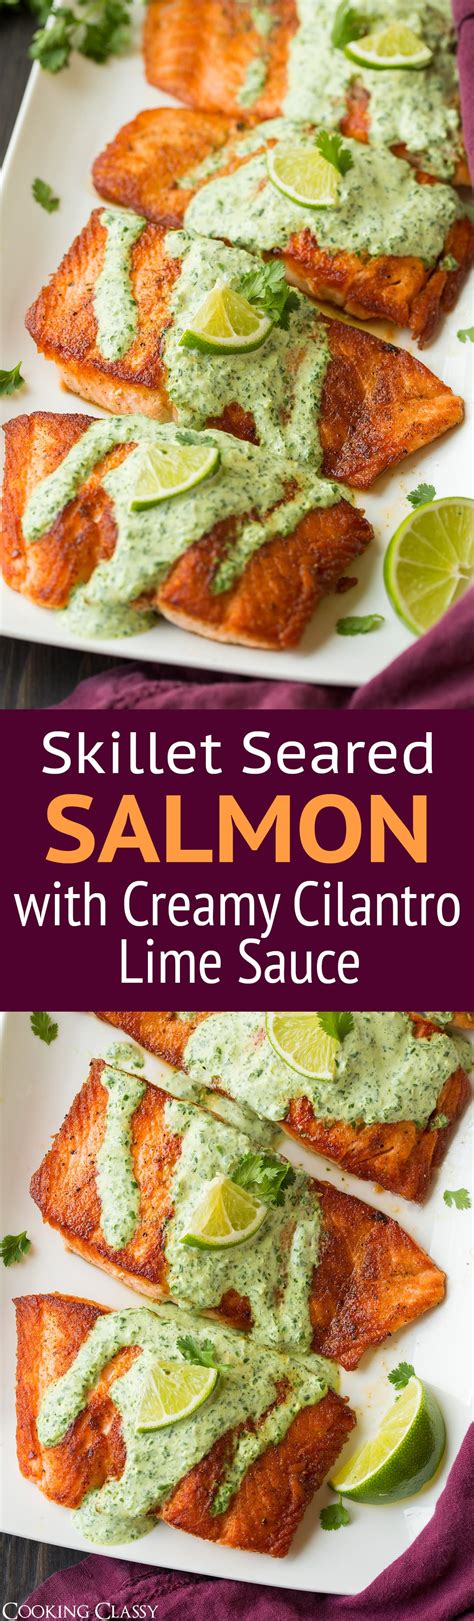 Cilantro Lime Salmon With Creamy Cilantro Sauce Cooking Classy